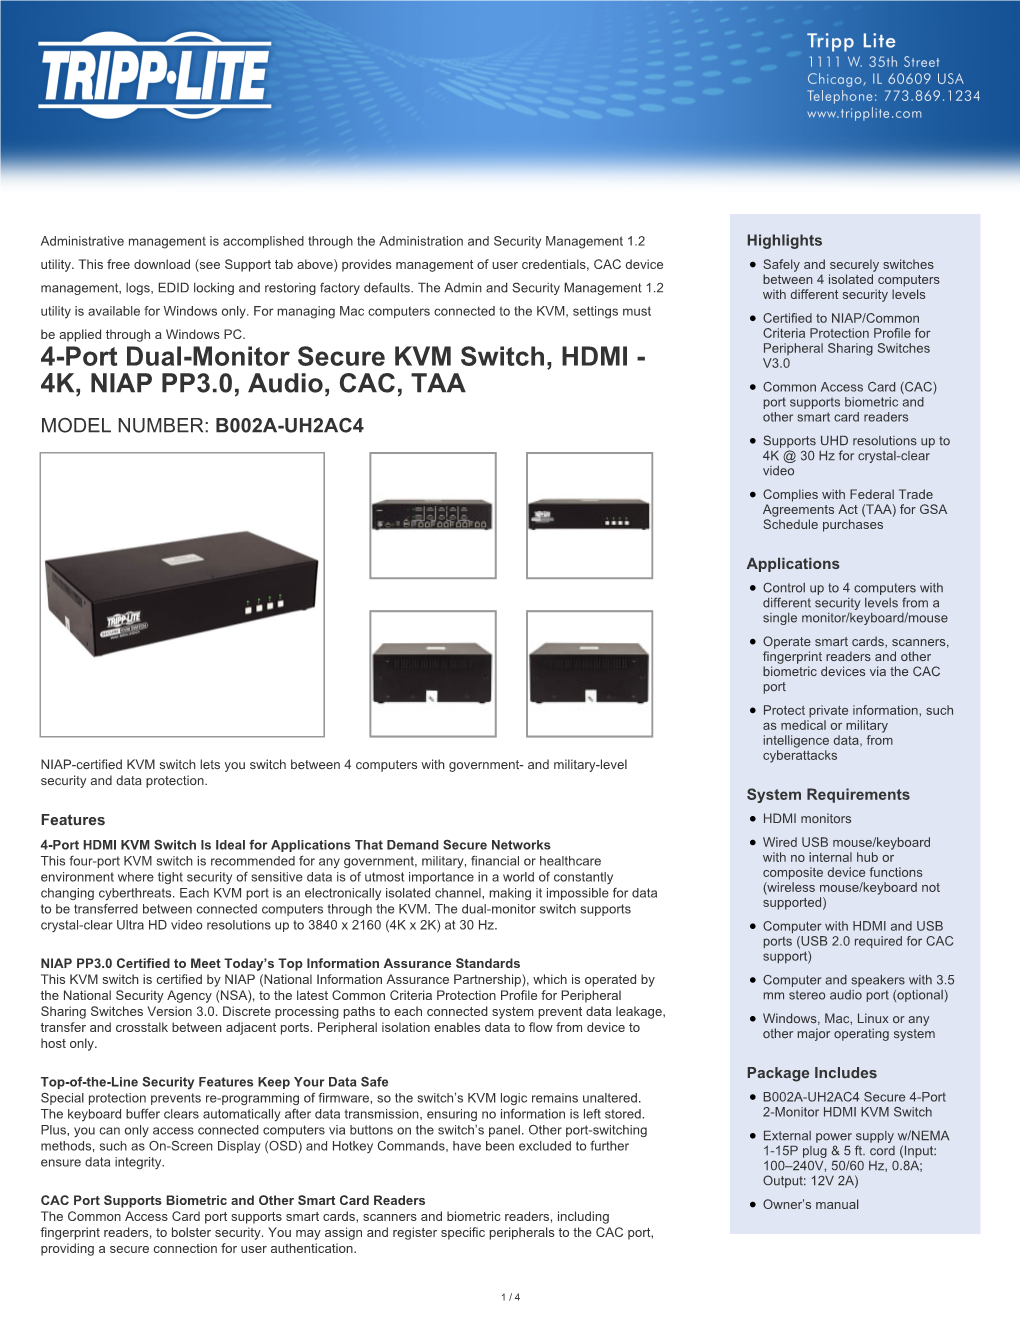 4-Port Dual-Monitor Secure KVM Switch, HDMI